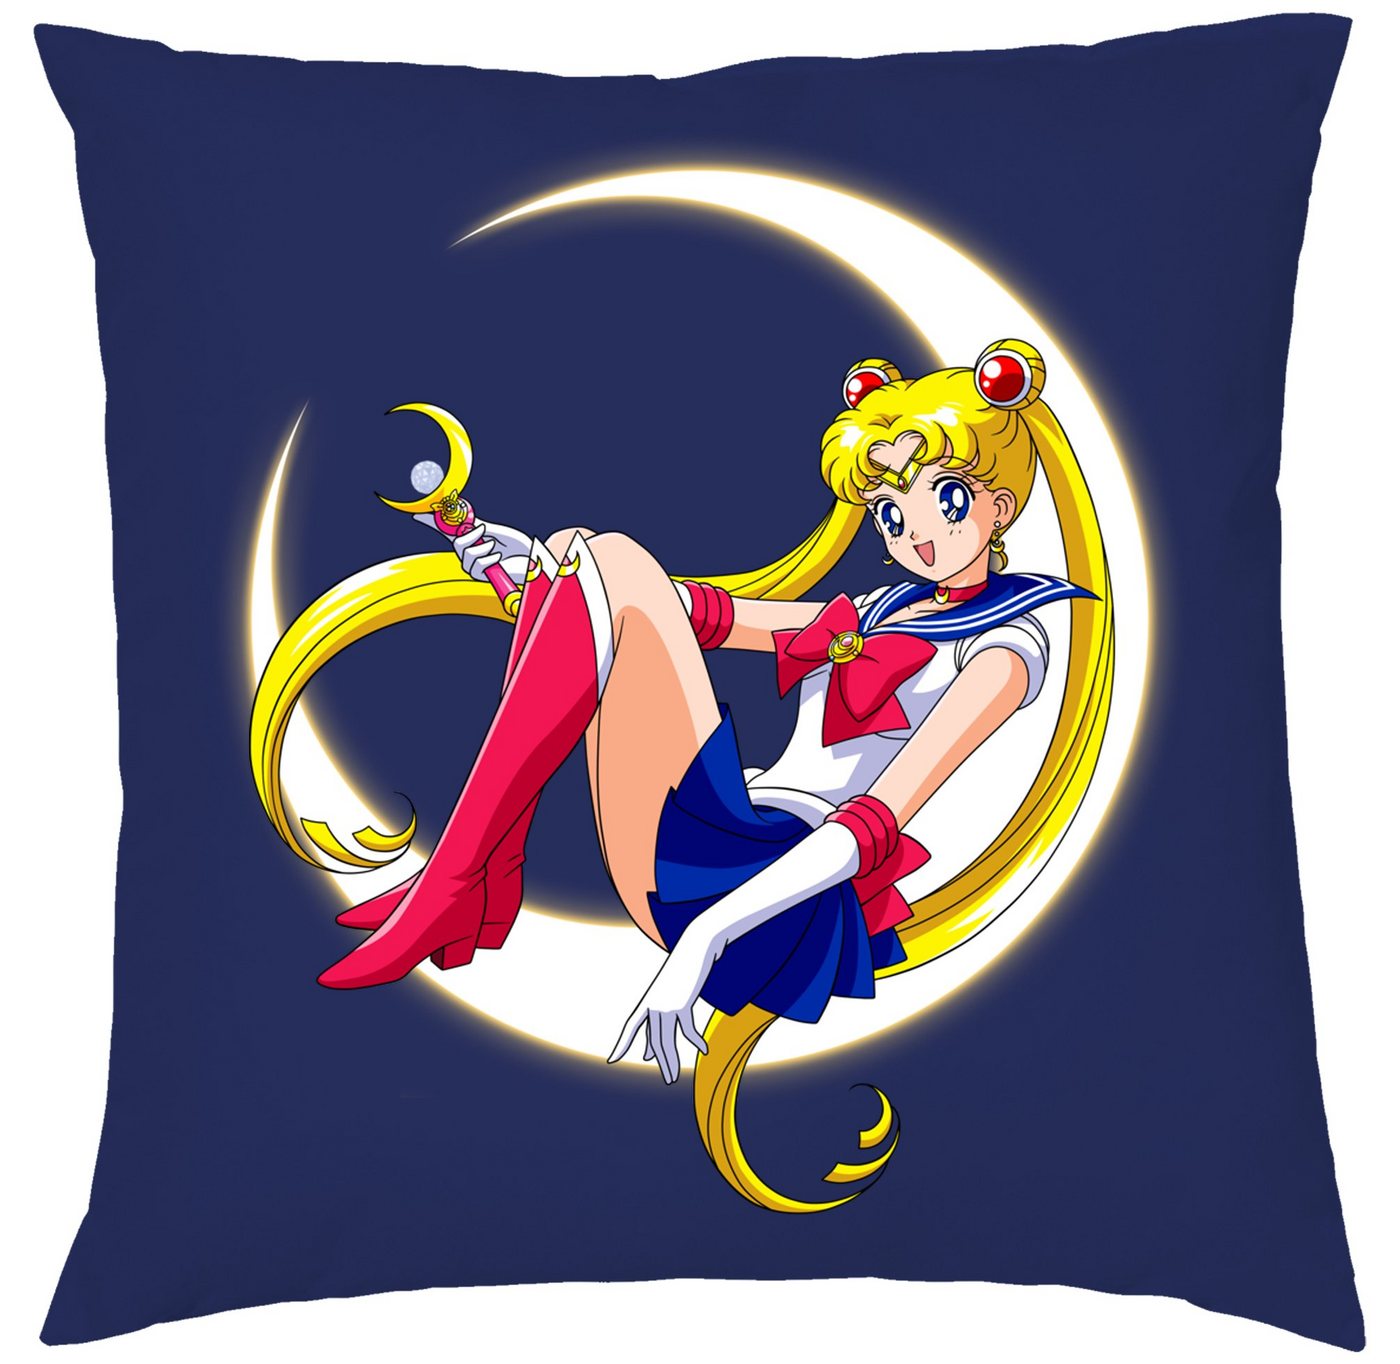 Blondie & Brownie Dekokissen Fun Comic Sailor Moon Anime Manga von Blondie & Brownie